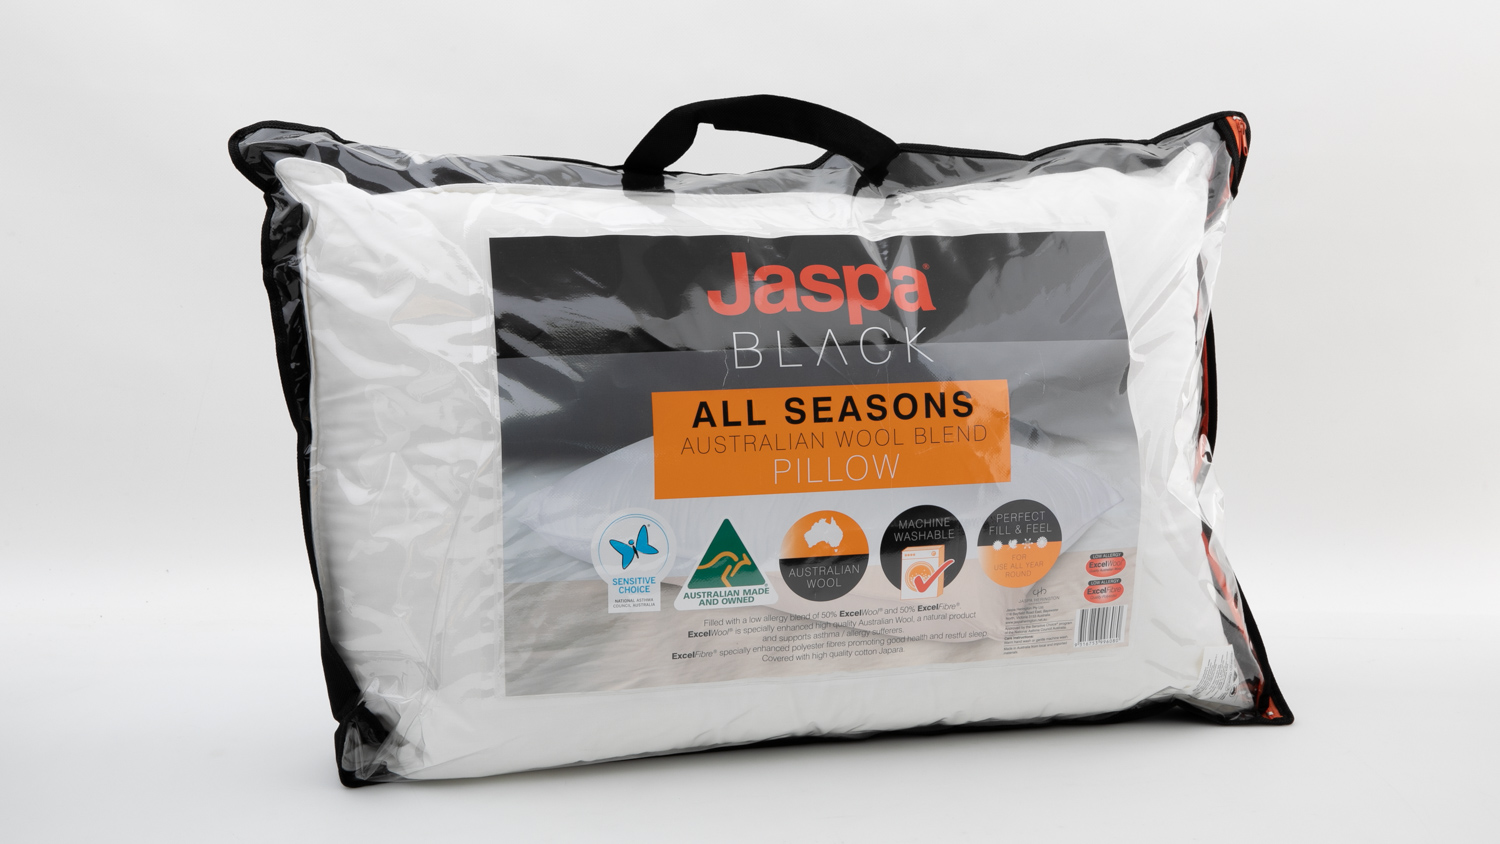 Jaspa Black All Seasons Australian Wool Blend Pillow carousel image